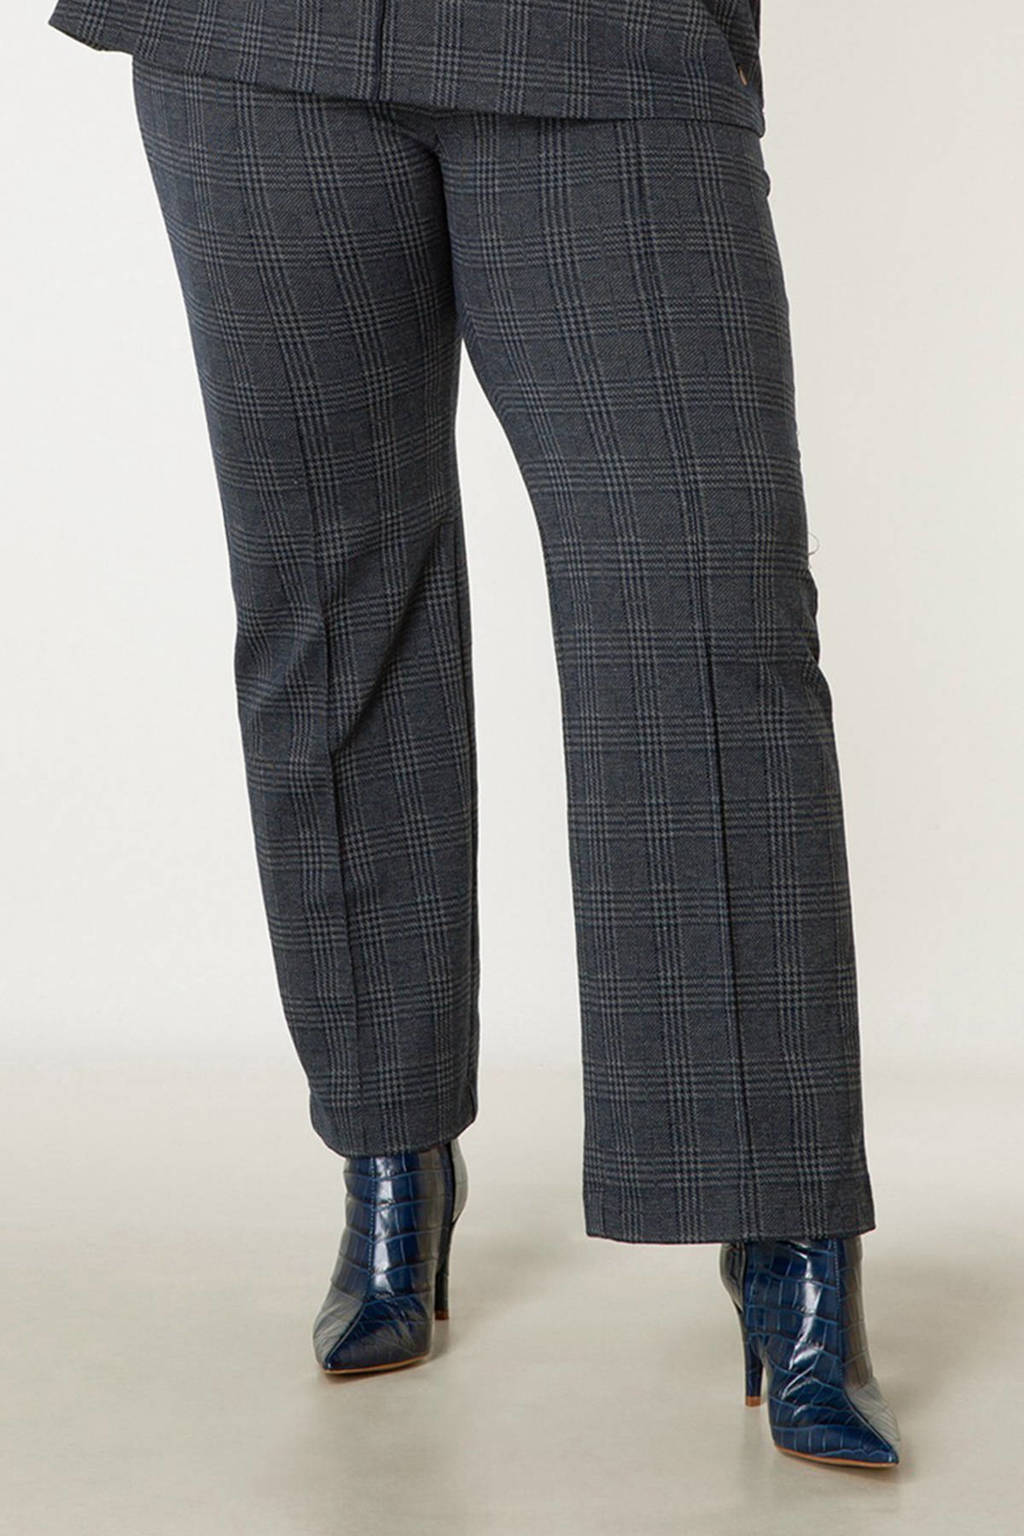 Yesta geruite straight fit pantalon Beaudine antraciet/donkerblauw, Antraciet/donkerblauw